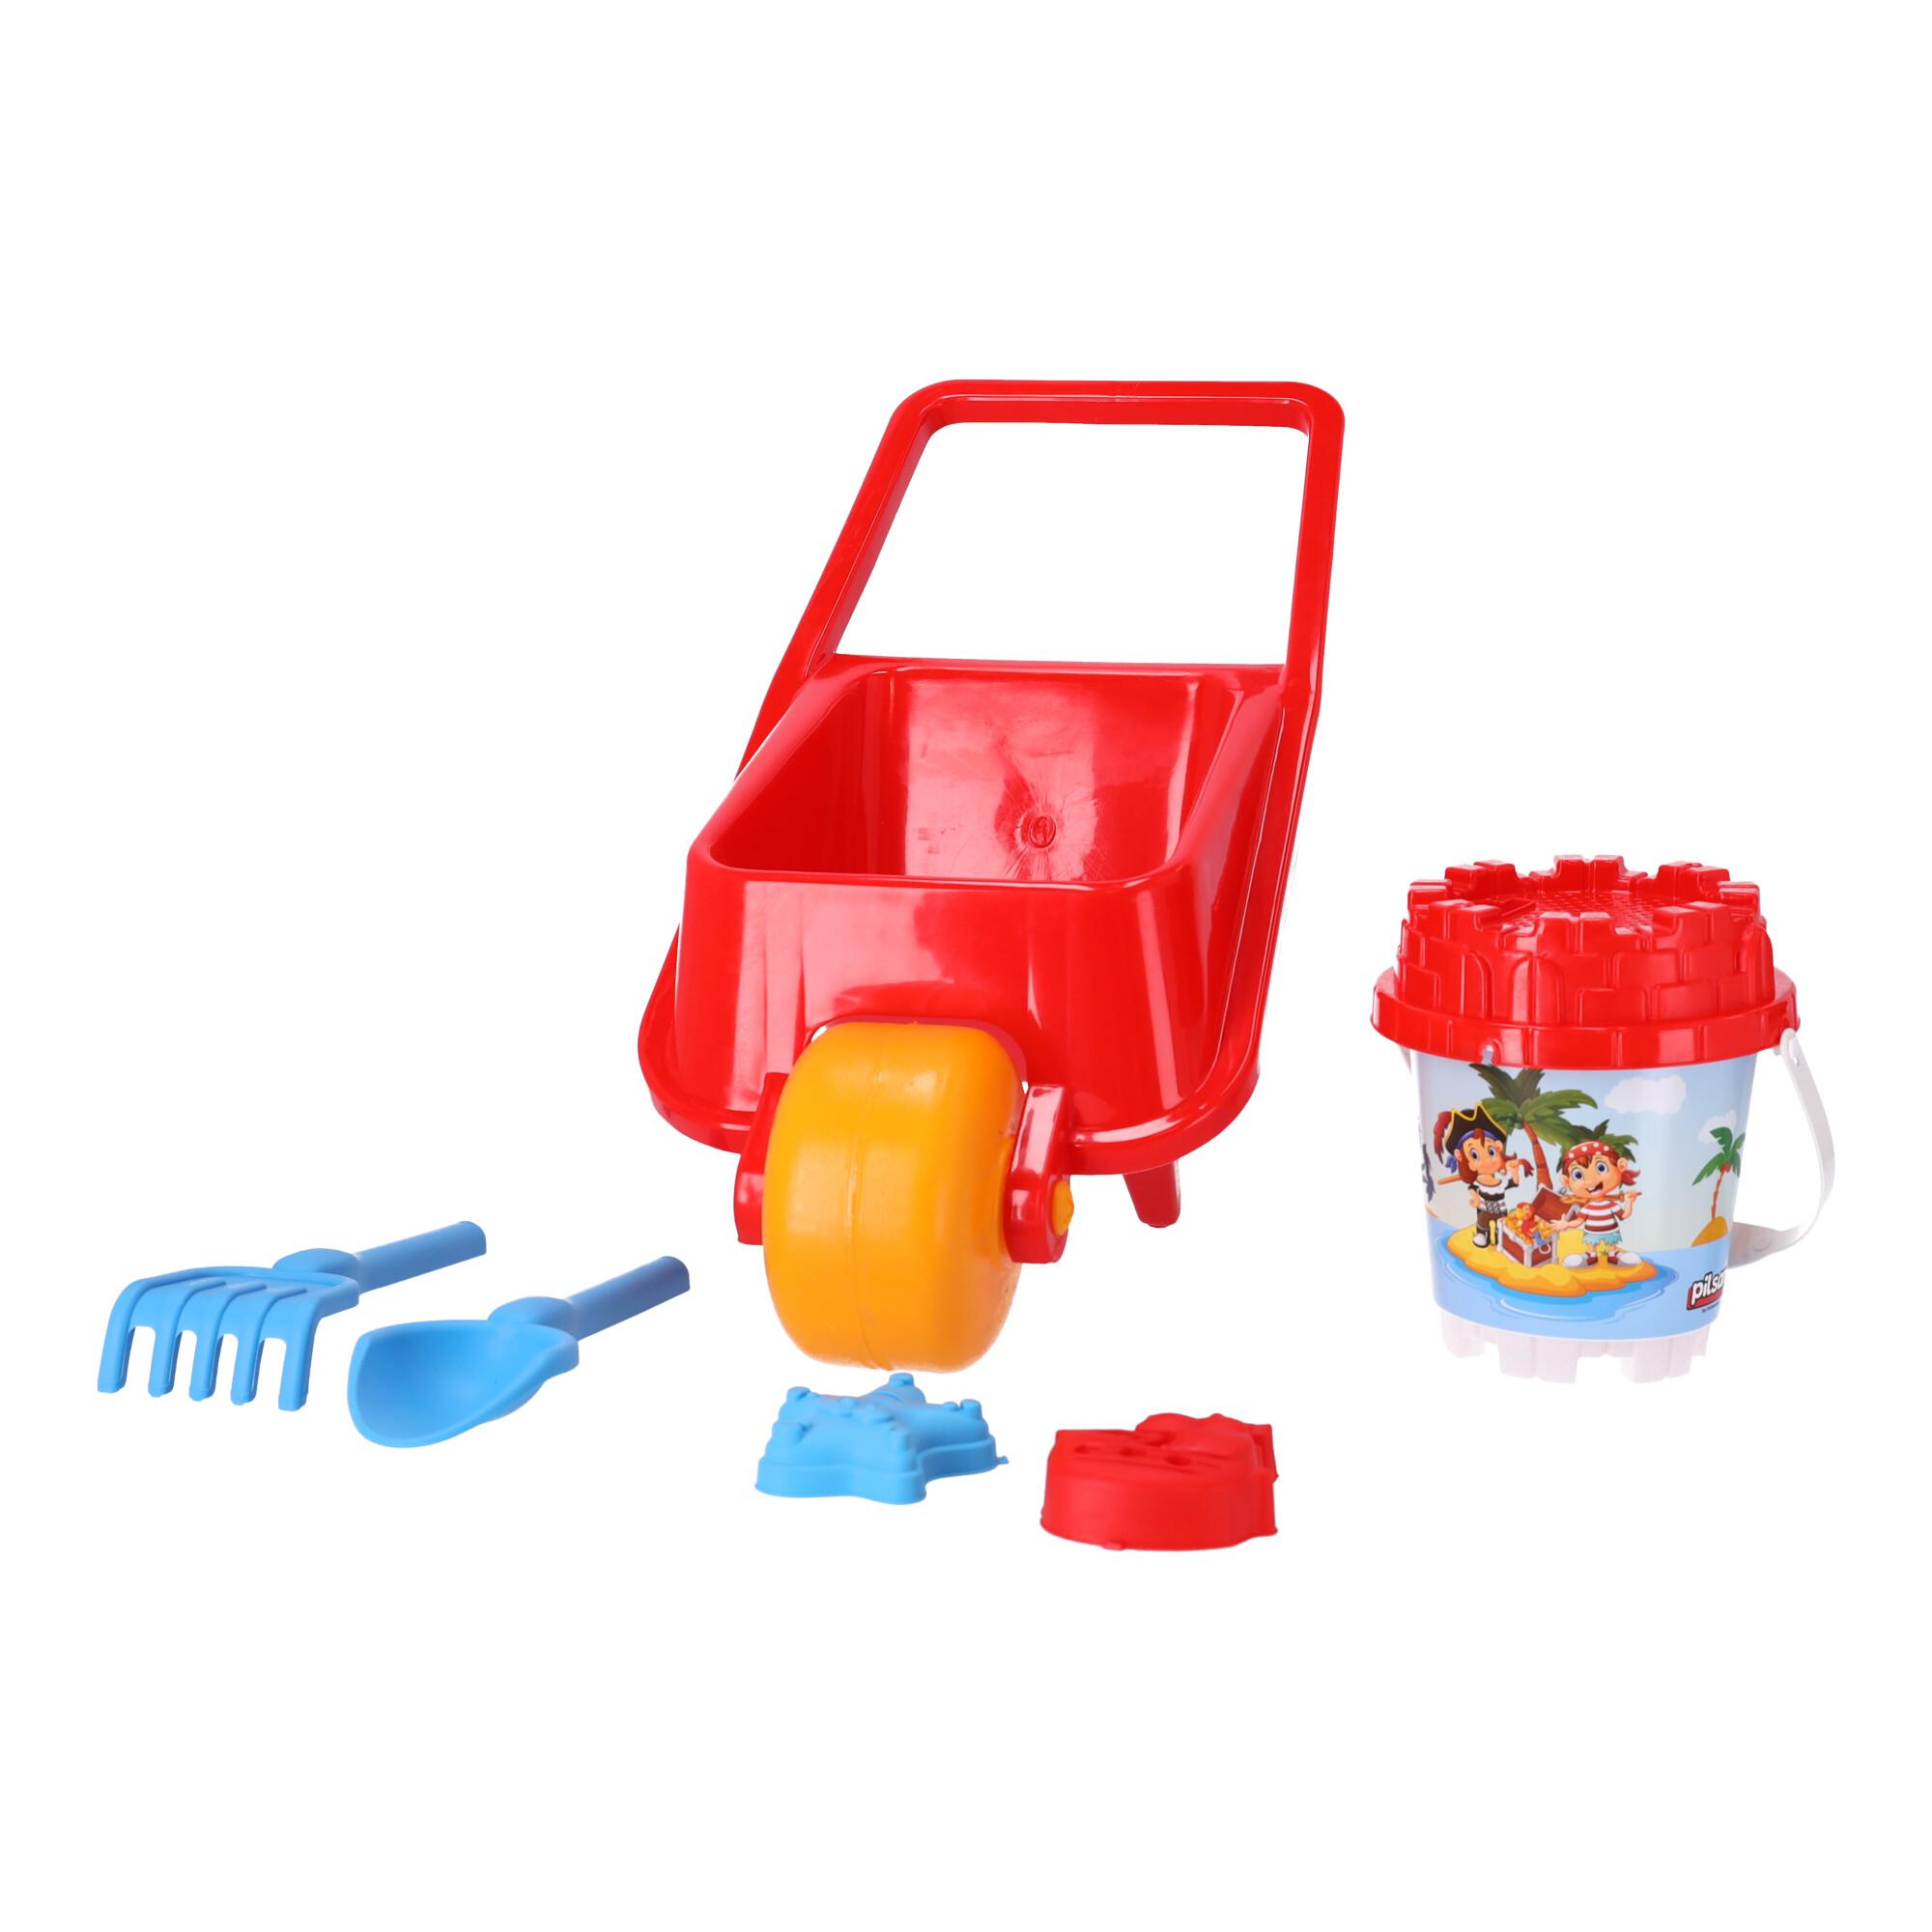 Wheelbarrow with sandbox accessories 5 items - red, Pilsan